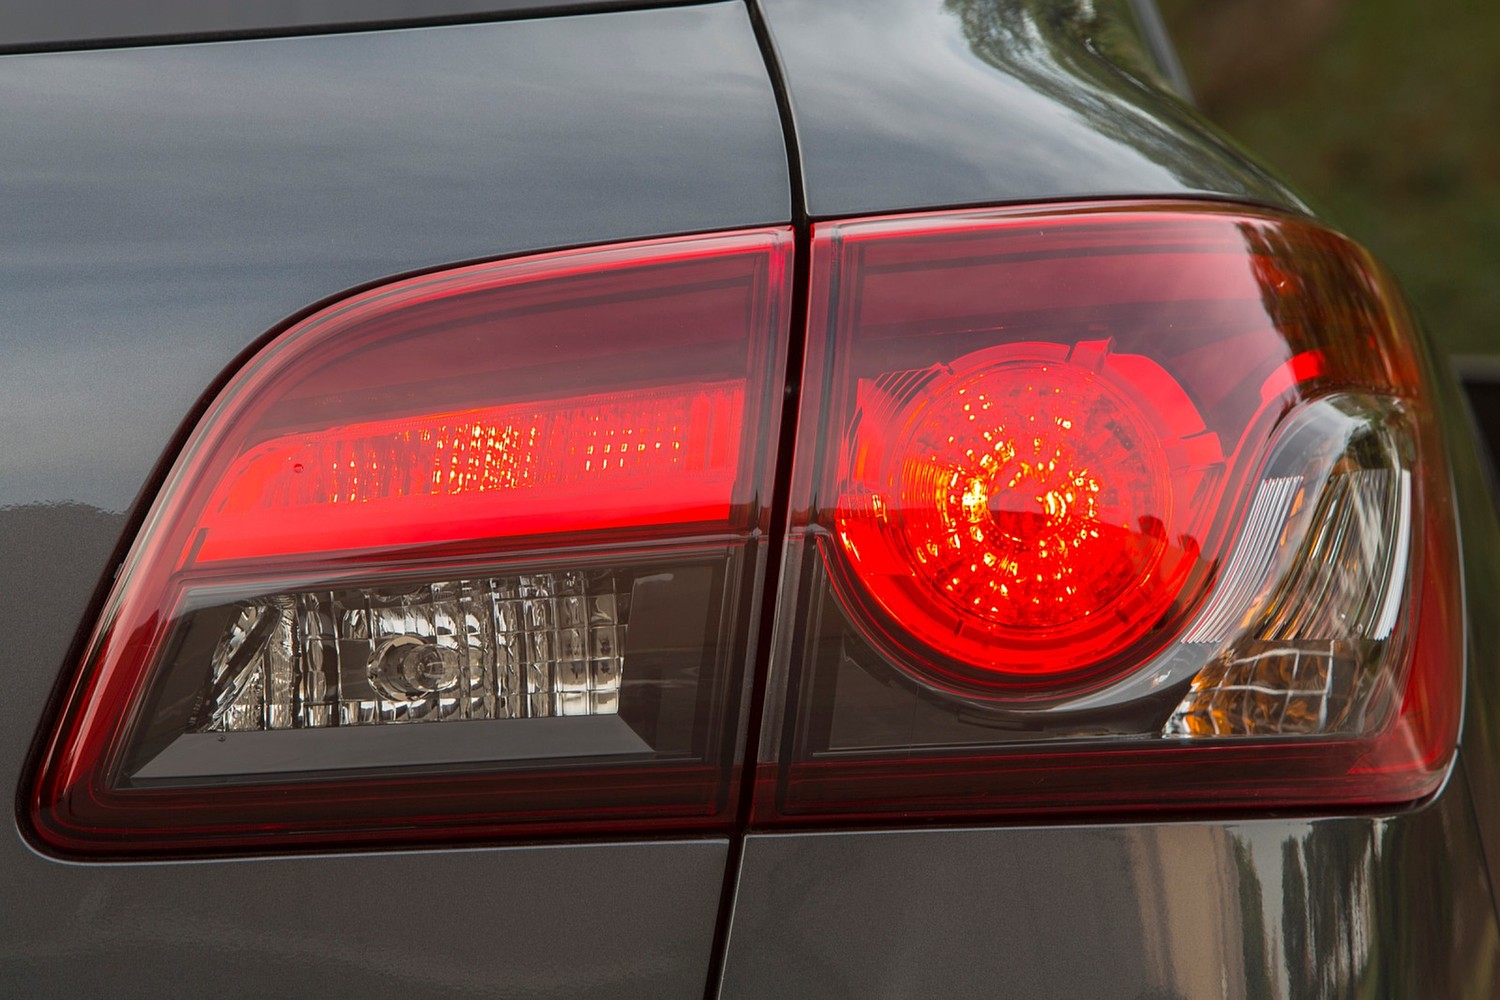 Mazda CX-9 Tail Light Detail (2013 model year shown)